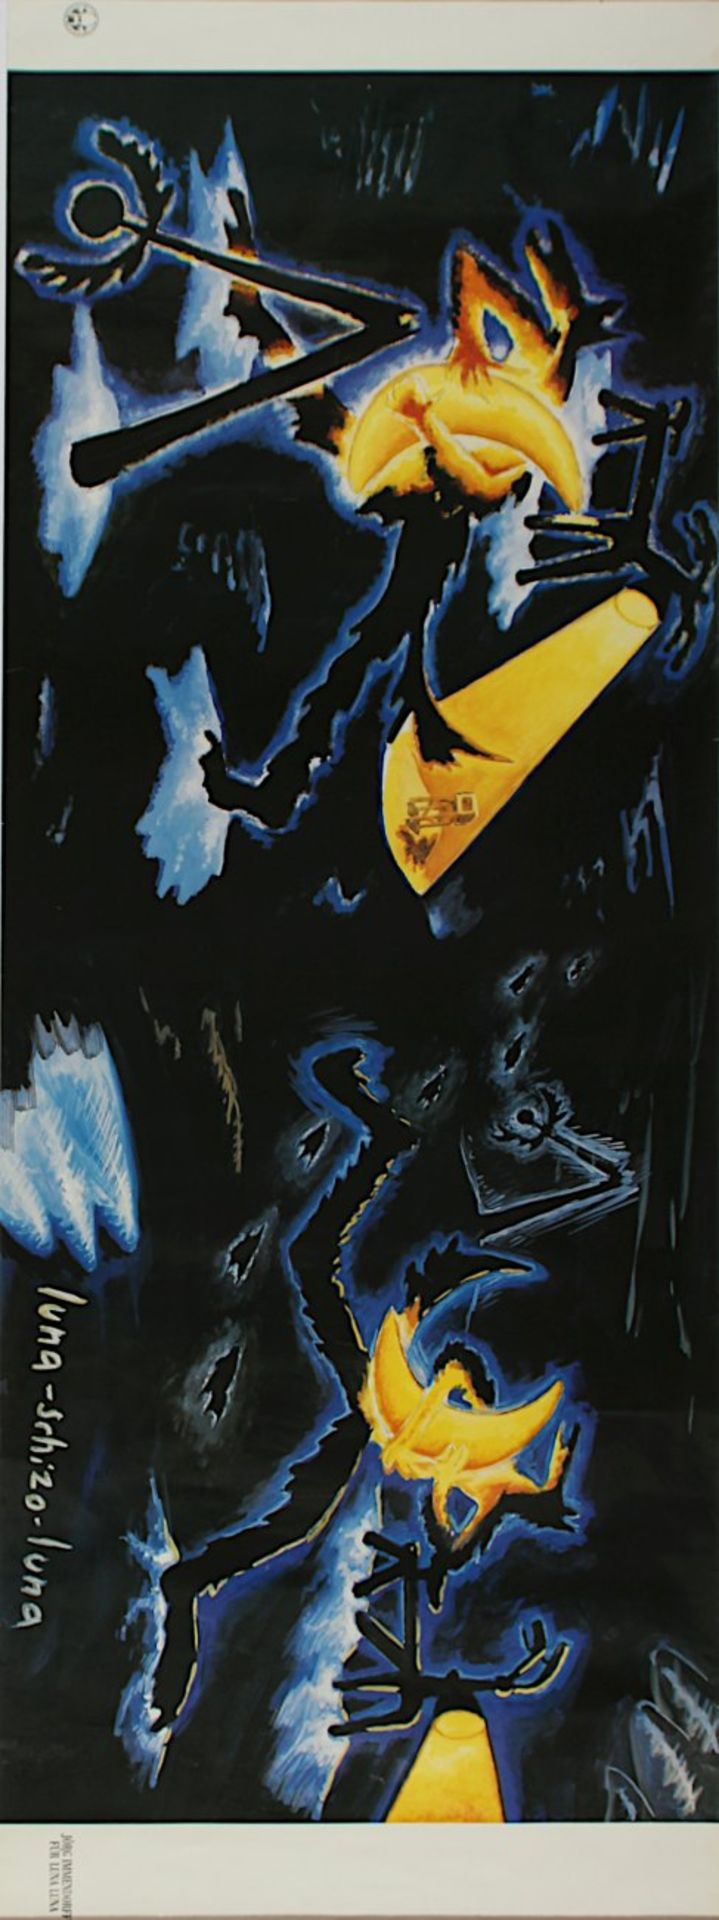 IMMENDORFF, Jörg, Plakat "Luna - Schizo - luna", Farboffset, 60 x 186, gedruckt in Belgien, Hecht